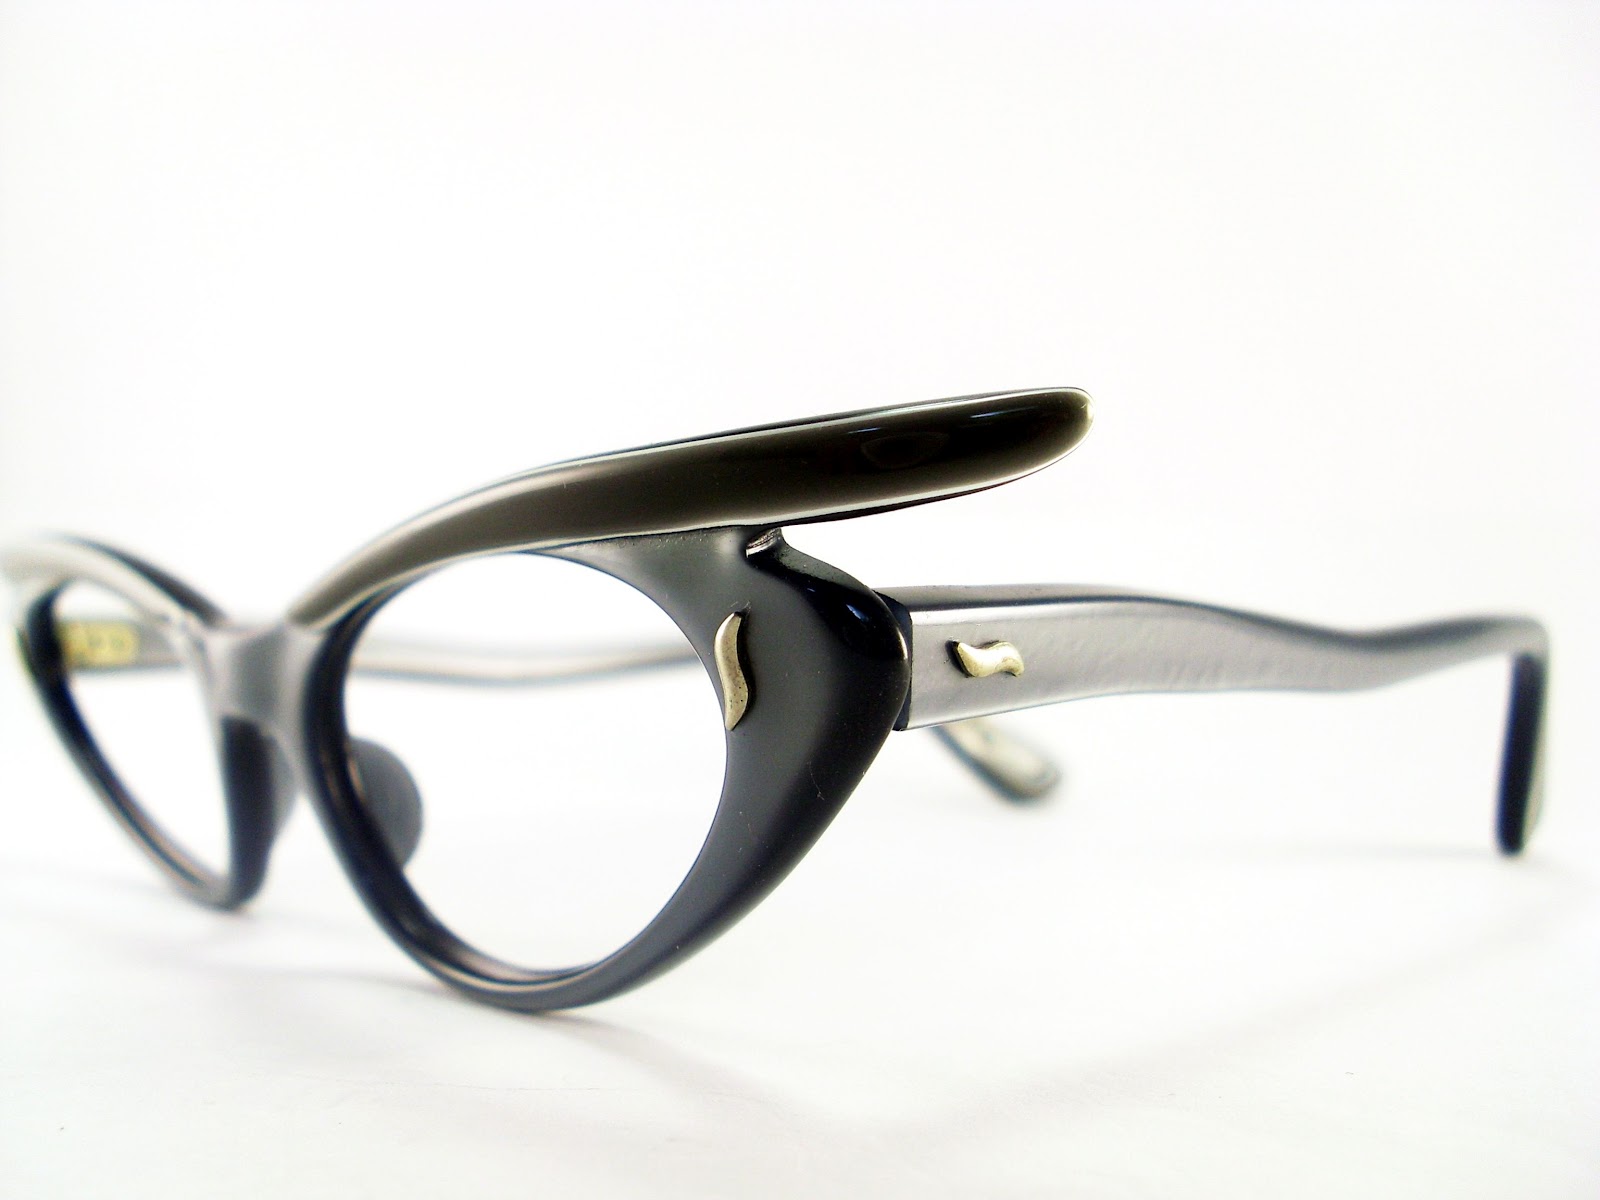 Vintage Eyeglasses Frames Eyewear Sunglasses 50s Cat Eye Glasses Frame